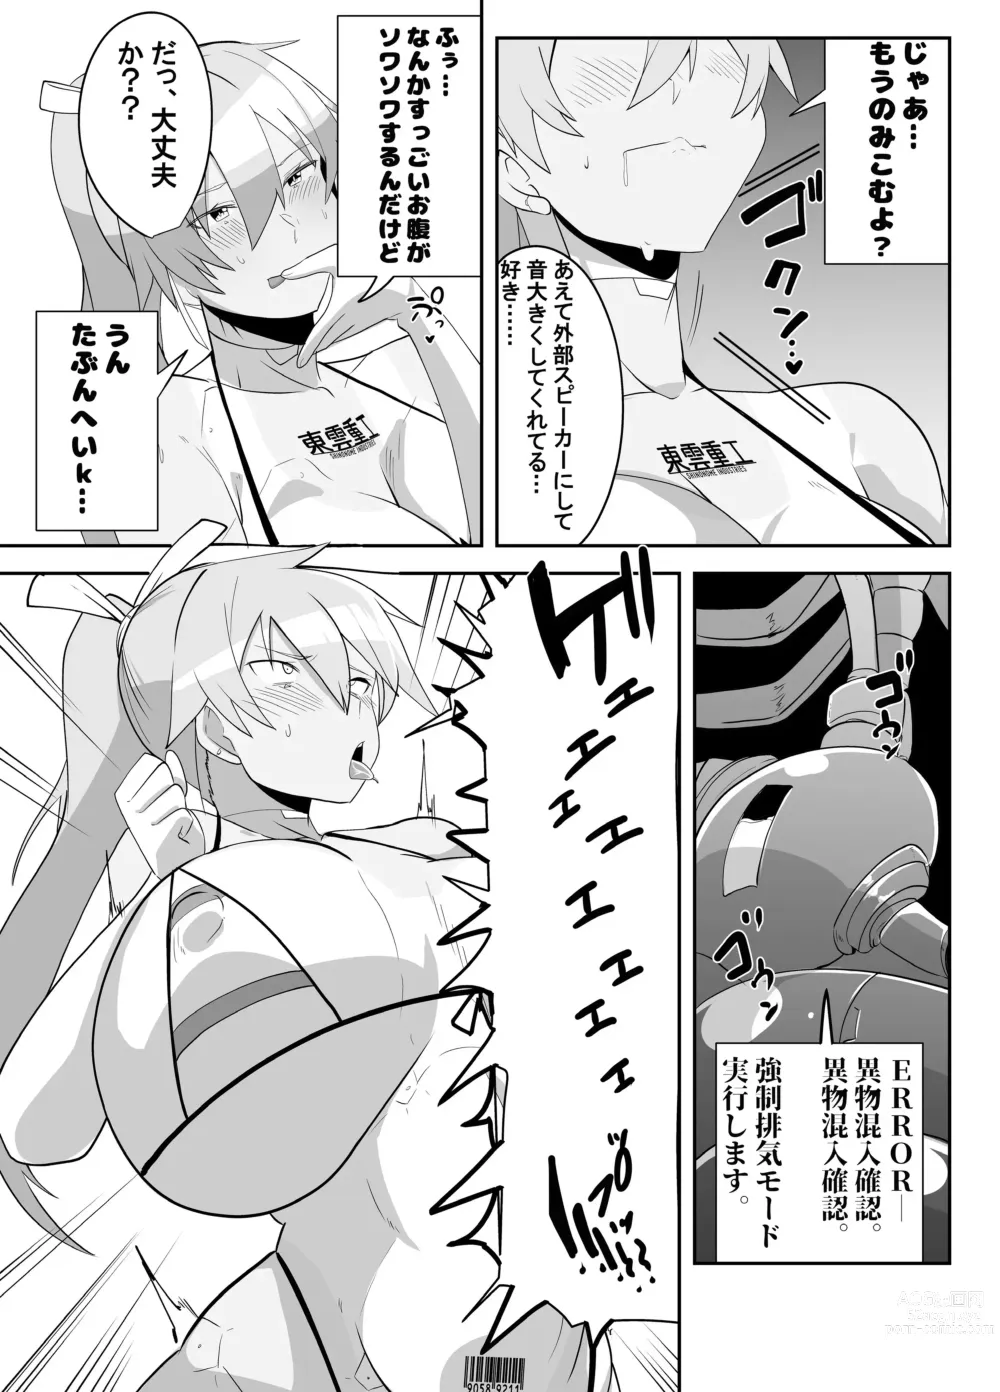 Page 11 of doujinshi Humanroid no Semen Paradise!